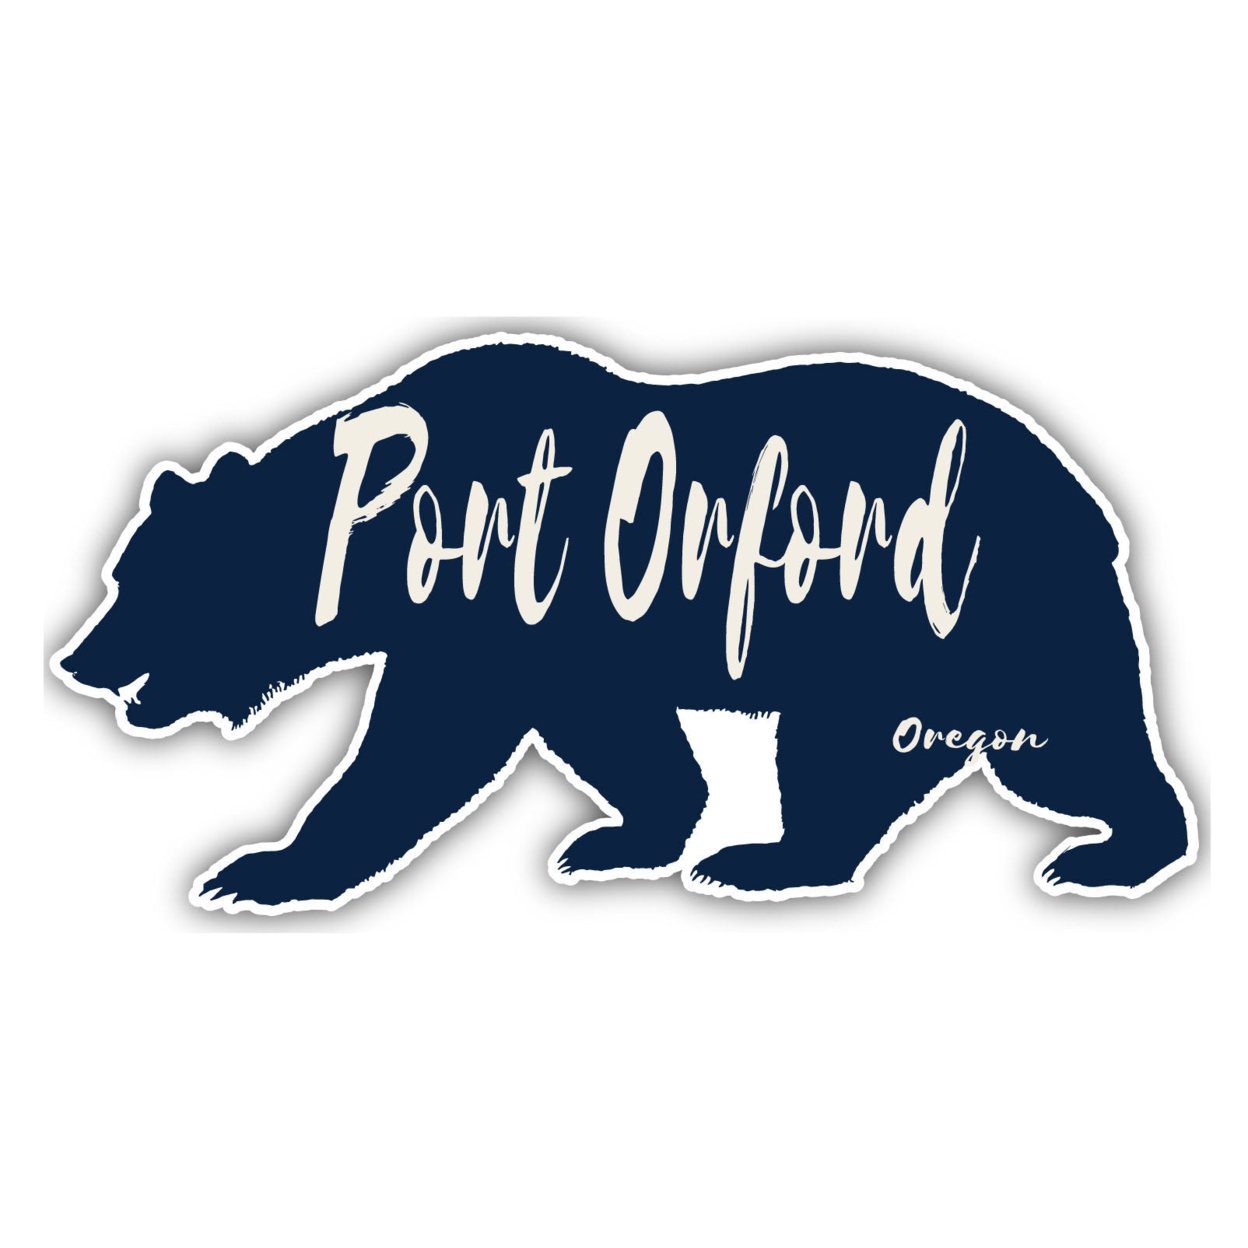 Port Orford Oregon Souvenir Decorative Stickers (Choose Theme And Size) - Single Unit, 2-Inch, Bear